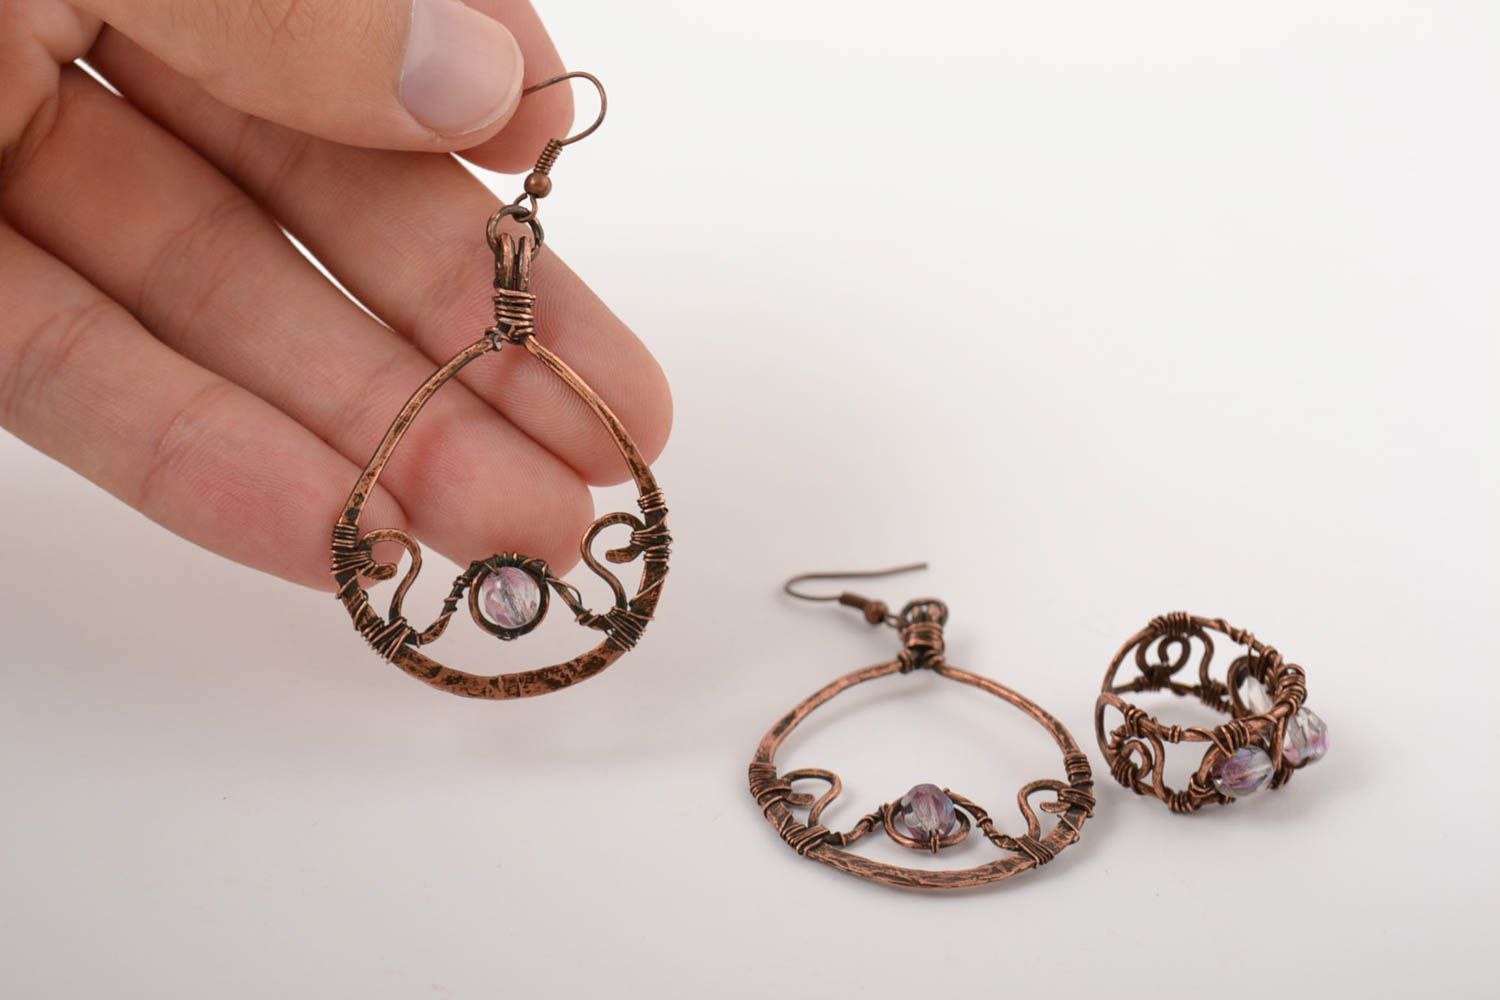 Fashionable jewelry set designer cute accessories handmade unusual jewelry photo 5